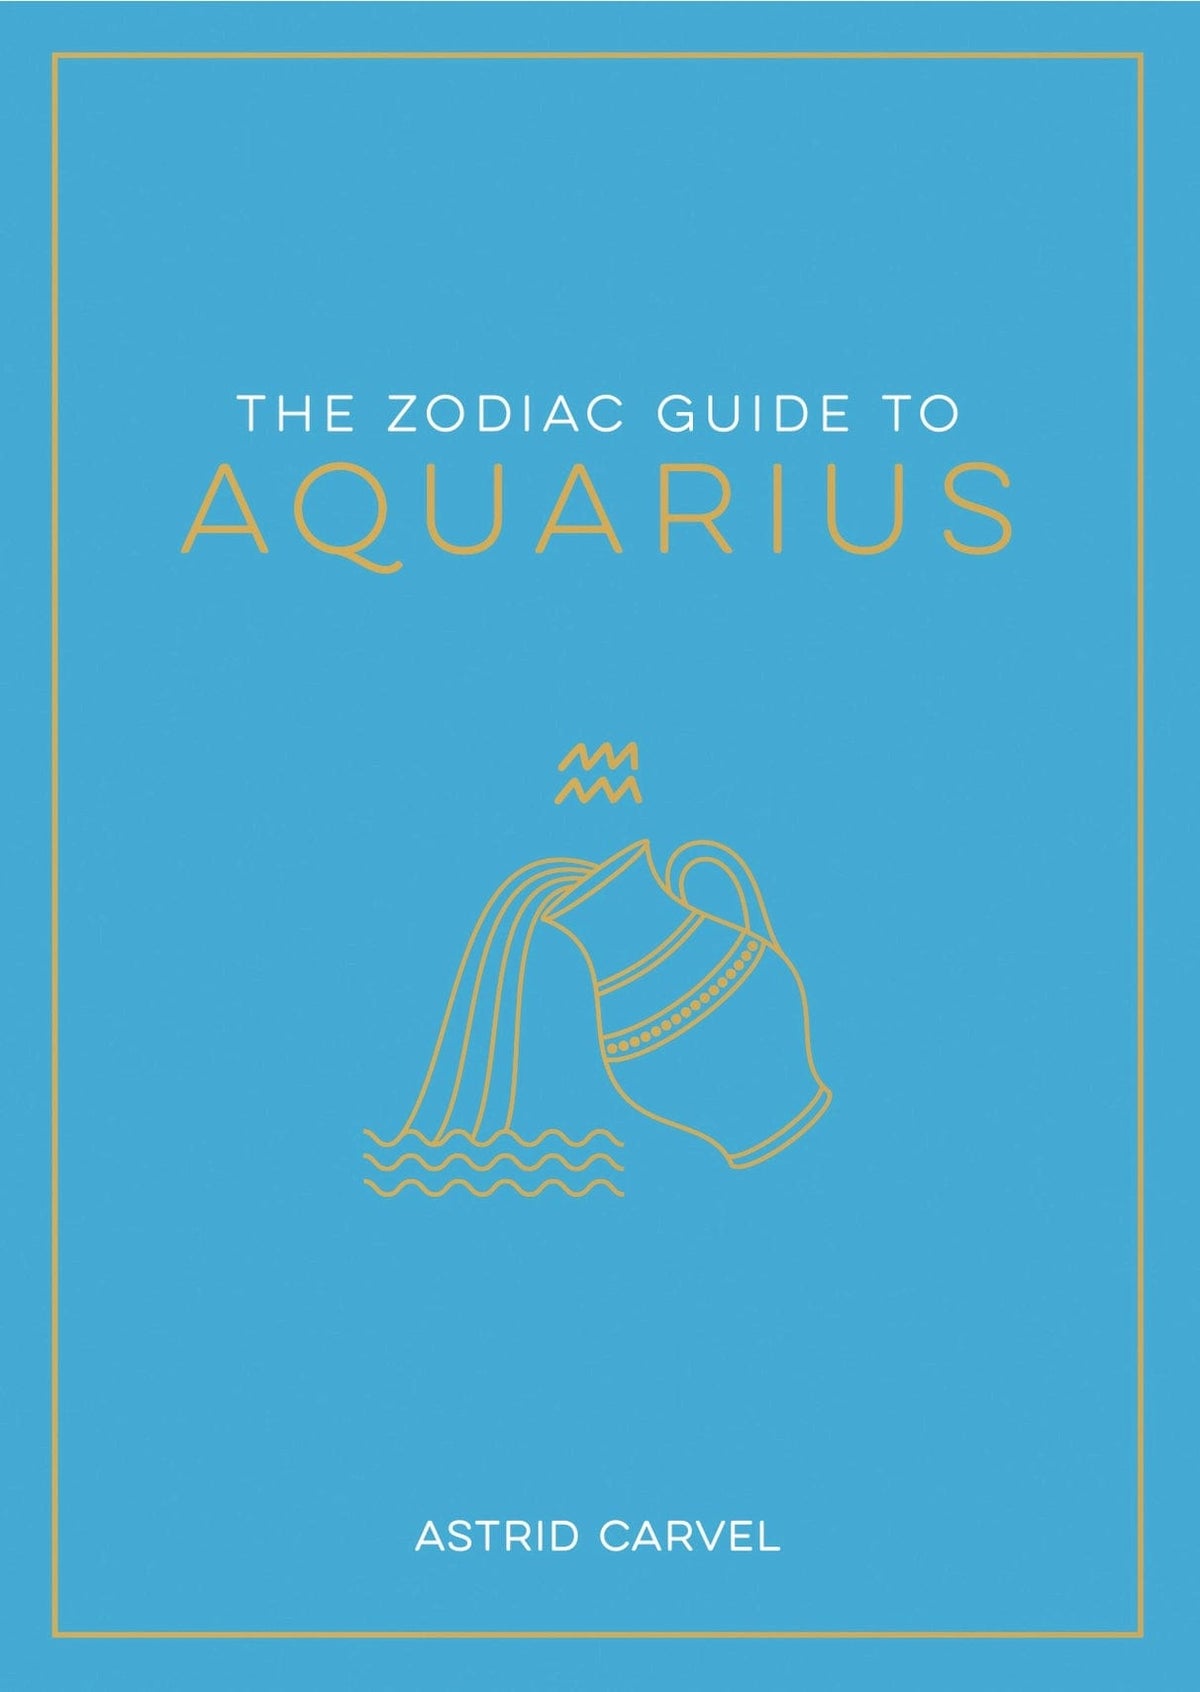 The Zodiac Guide To Aquarius